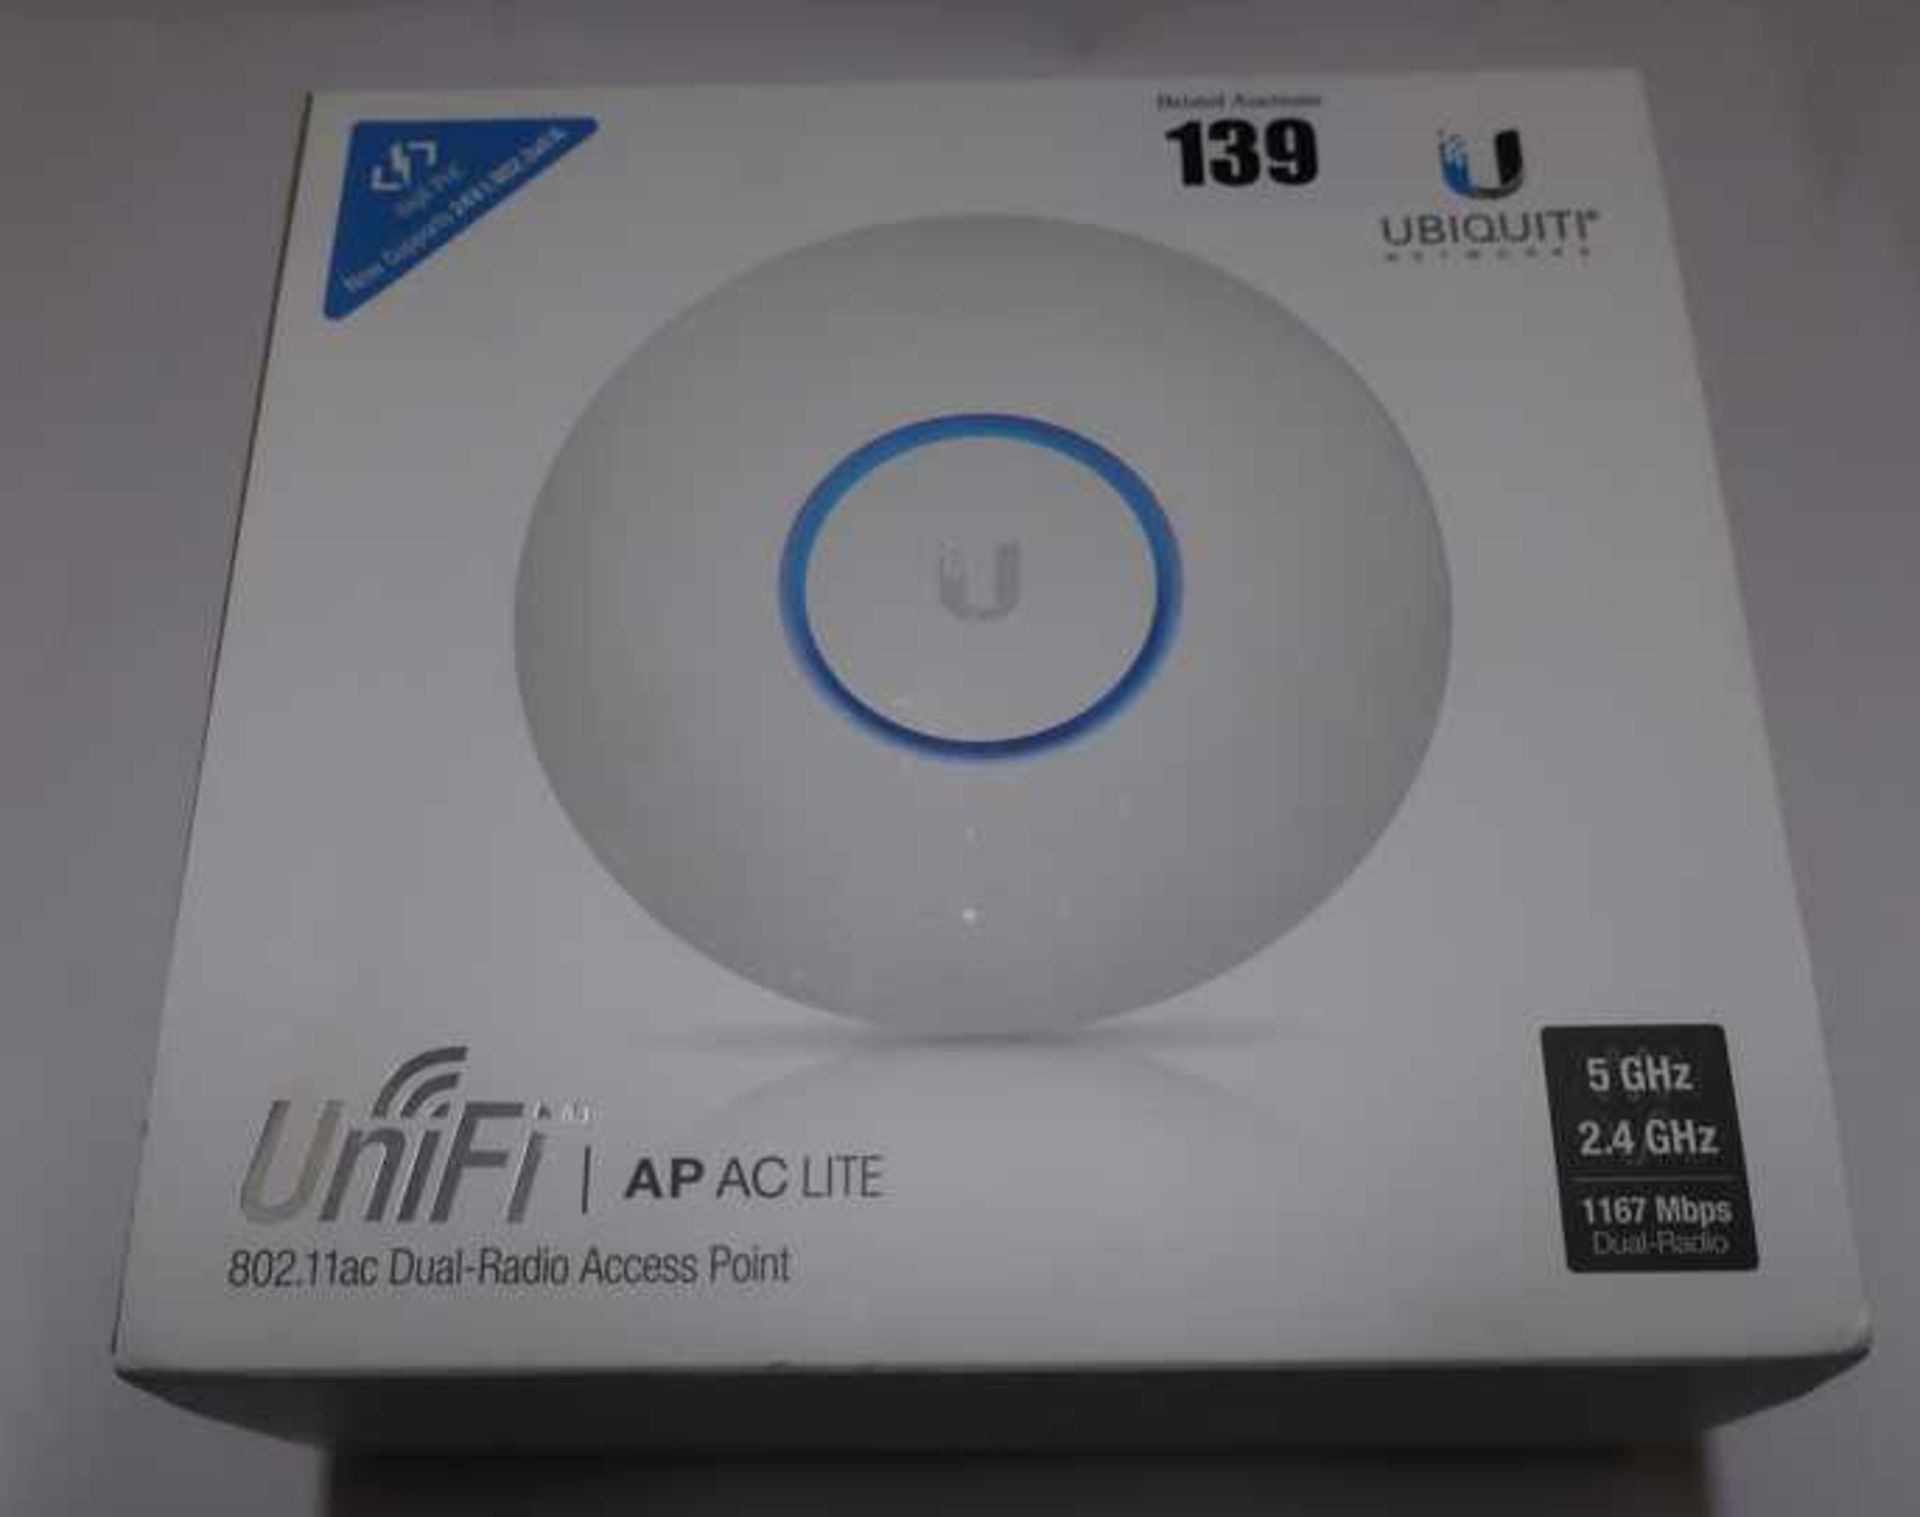 A boxed as new Ubiquiti Unifi AC Lite AP Wireless Access Point (UAP-AC-LITE).